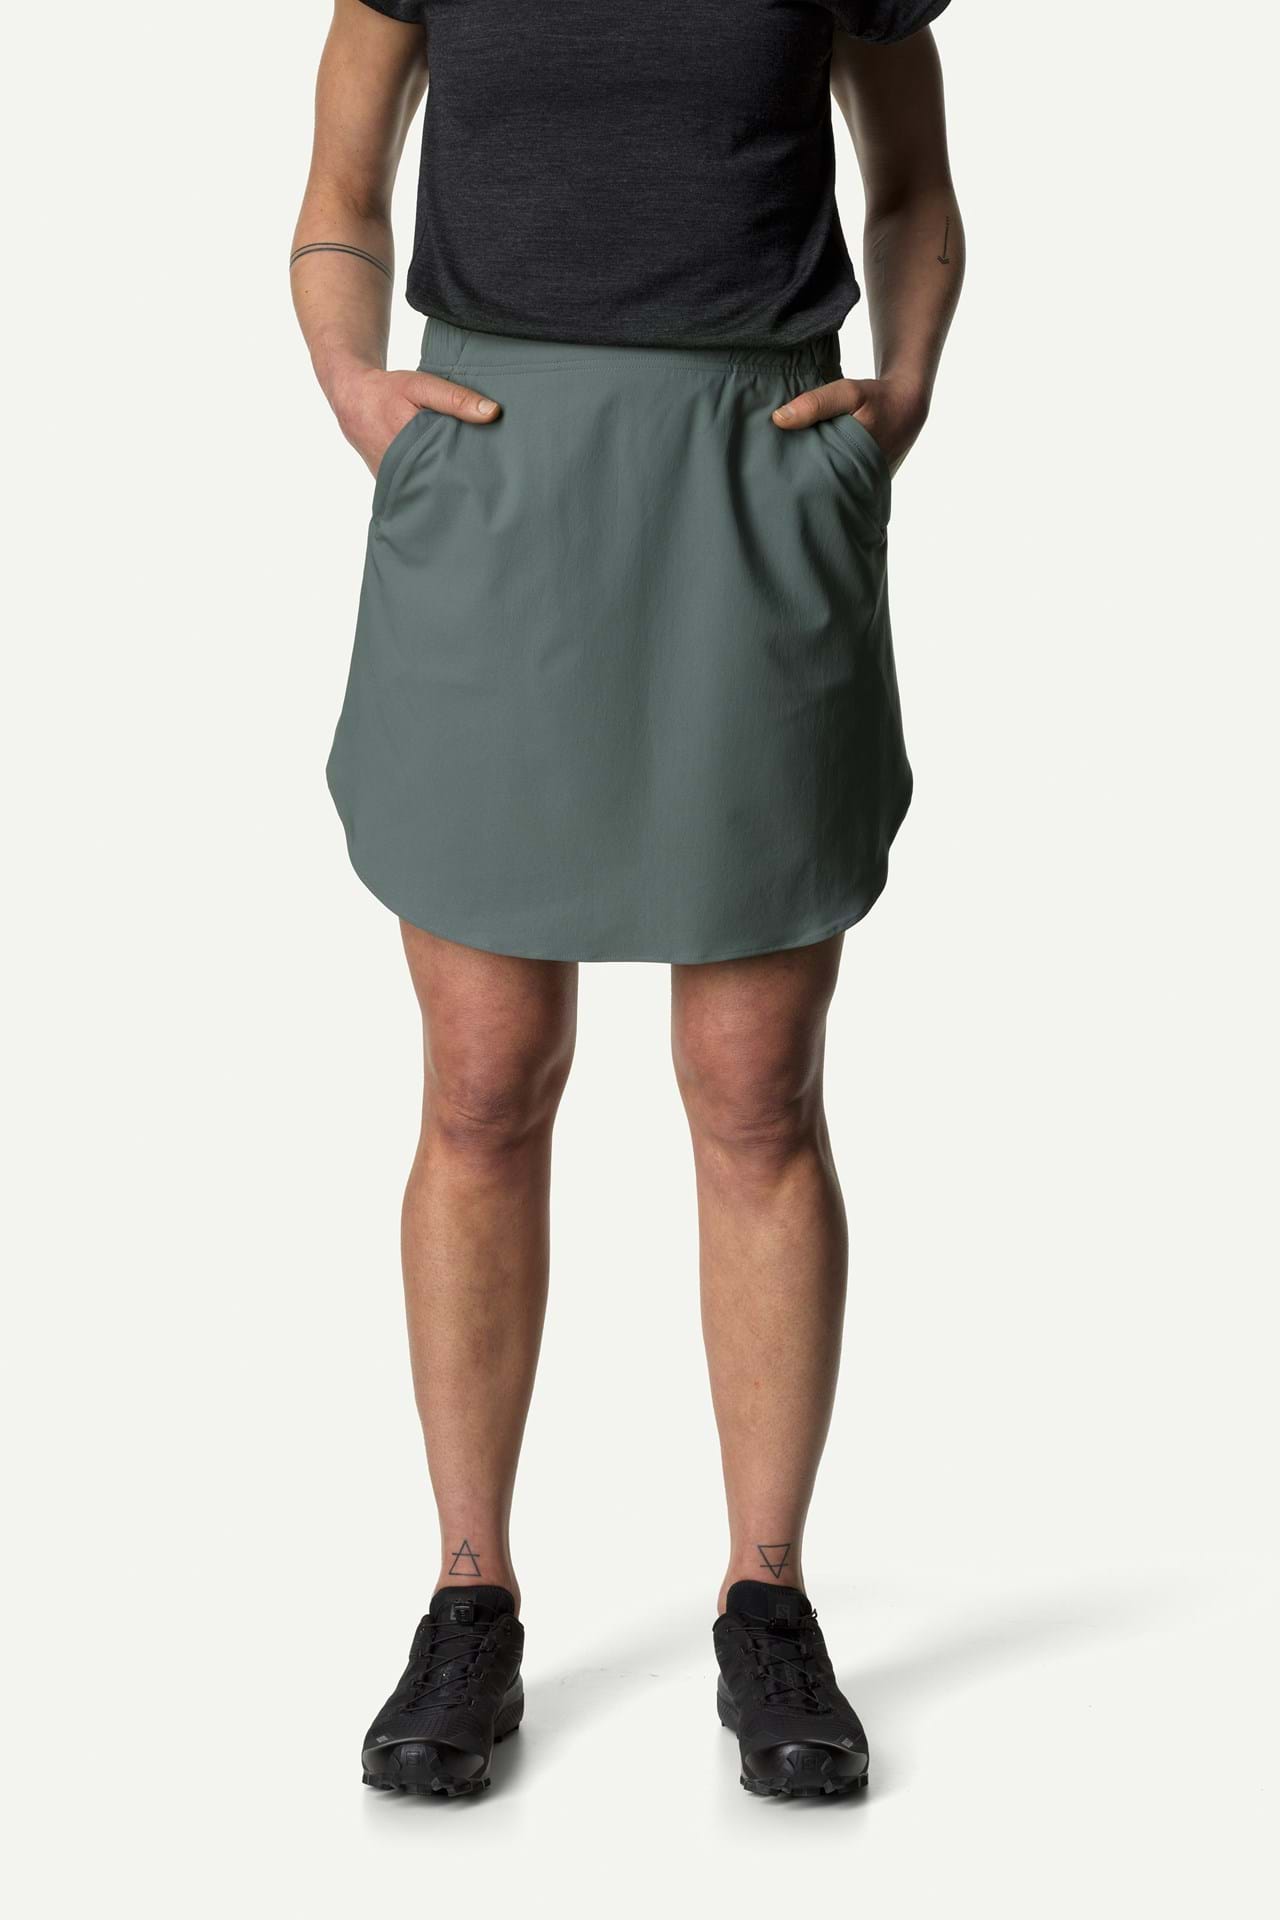 Houdini - W's Stride Skirt - Recycled PET - Weekendbee - sustainable sportswear